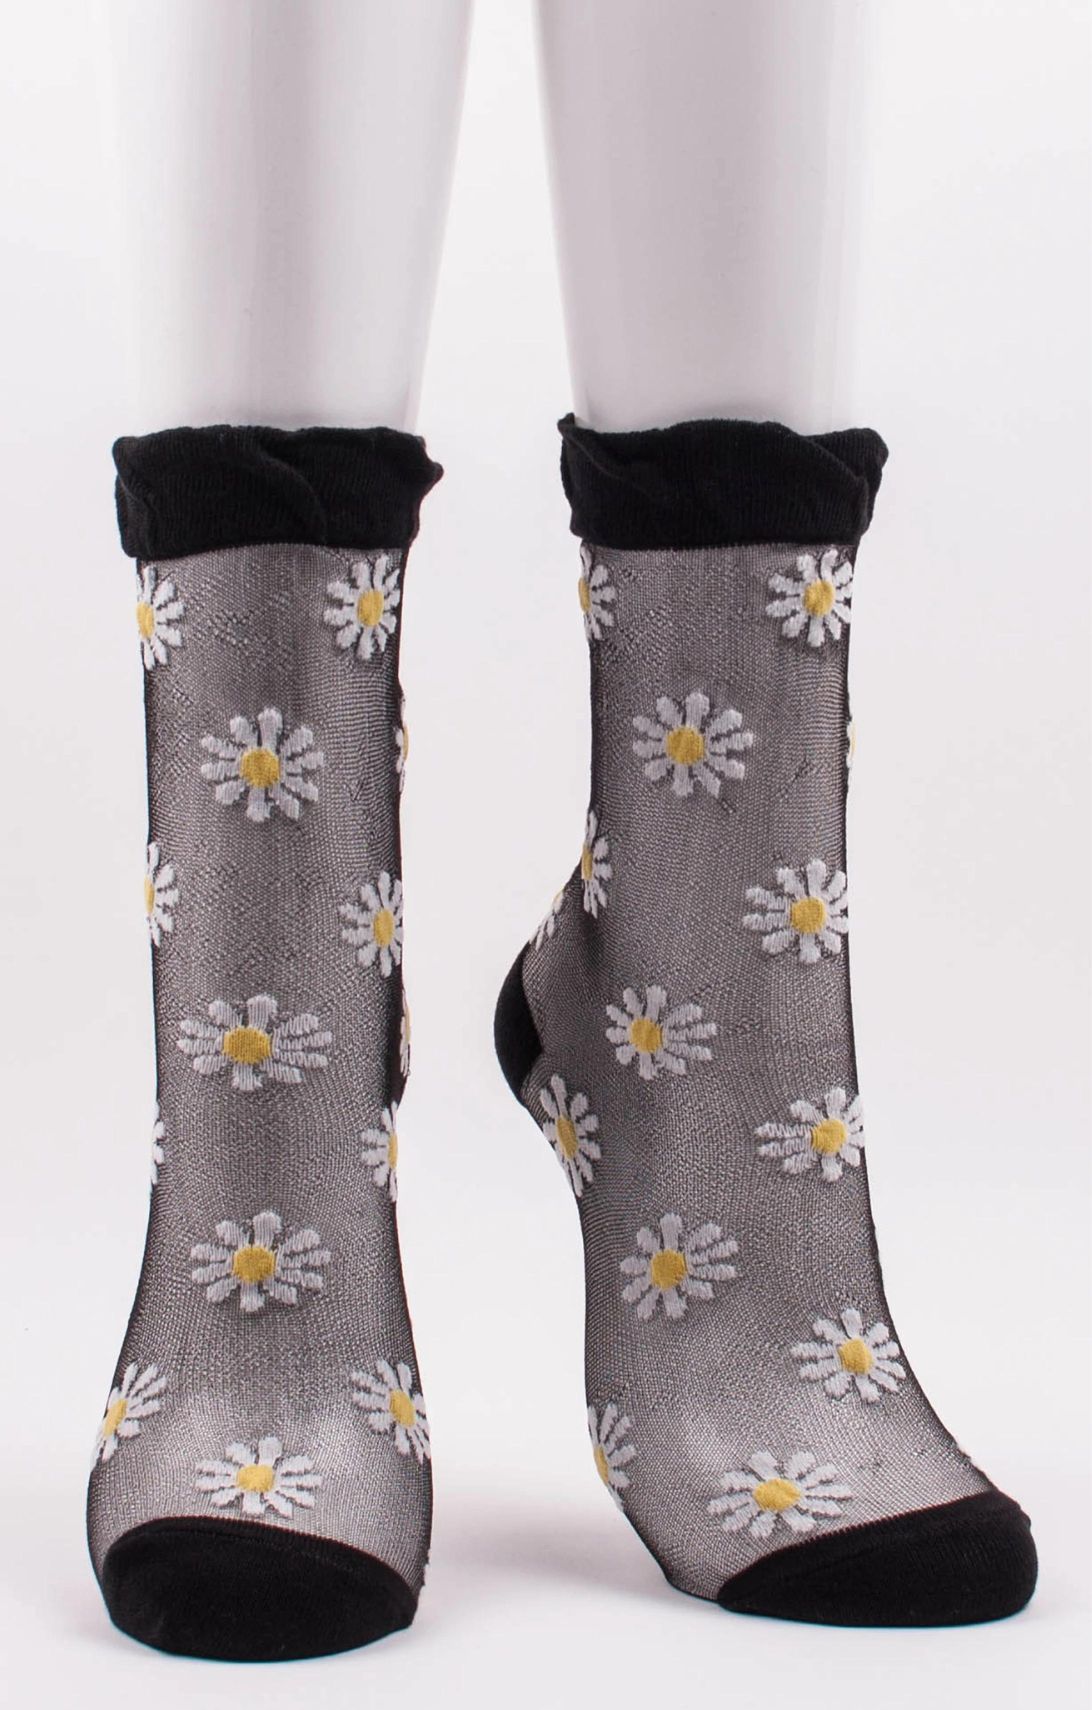 TABBISOCKS brand Daisy Sheer Socks in black with white daisy flower illustrations all over the transparent black fabric.